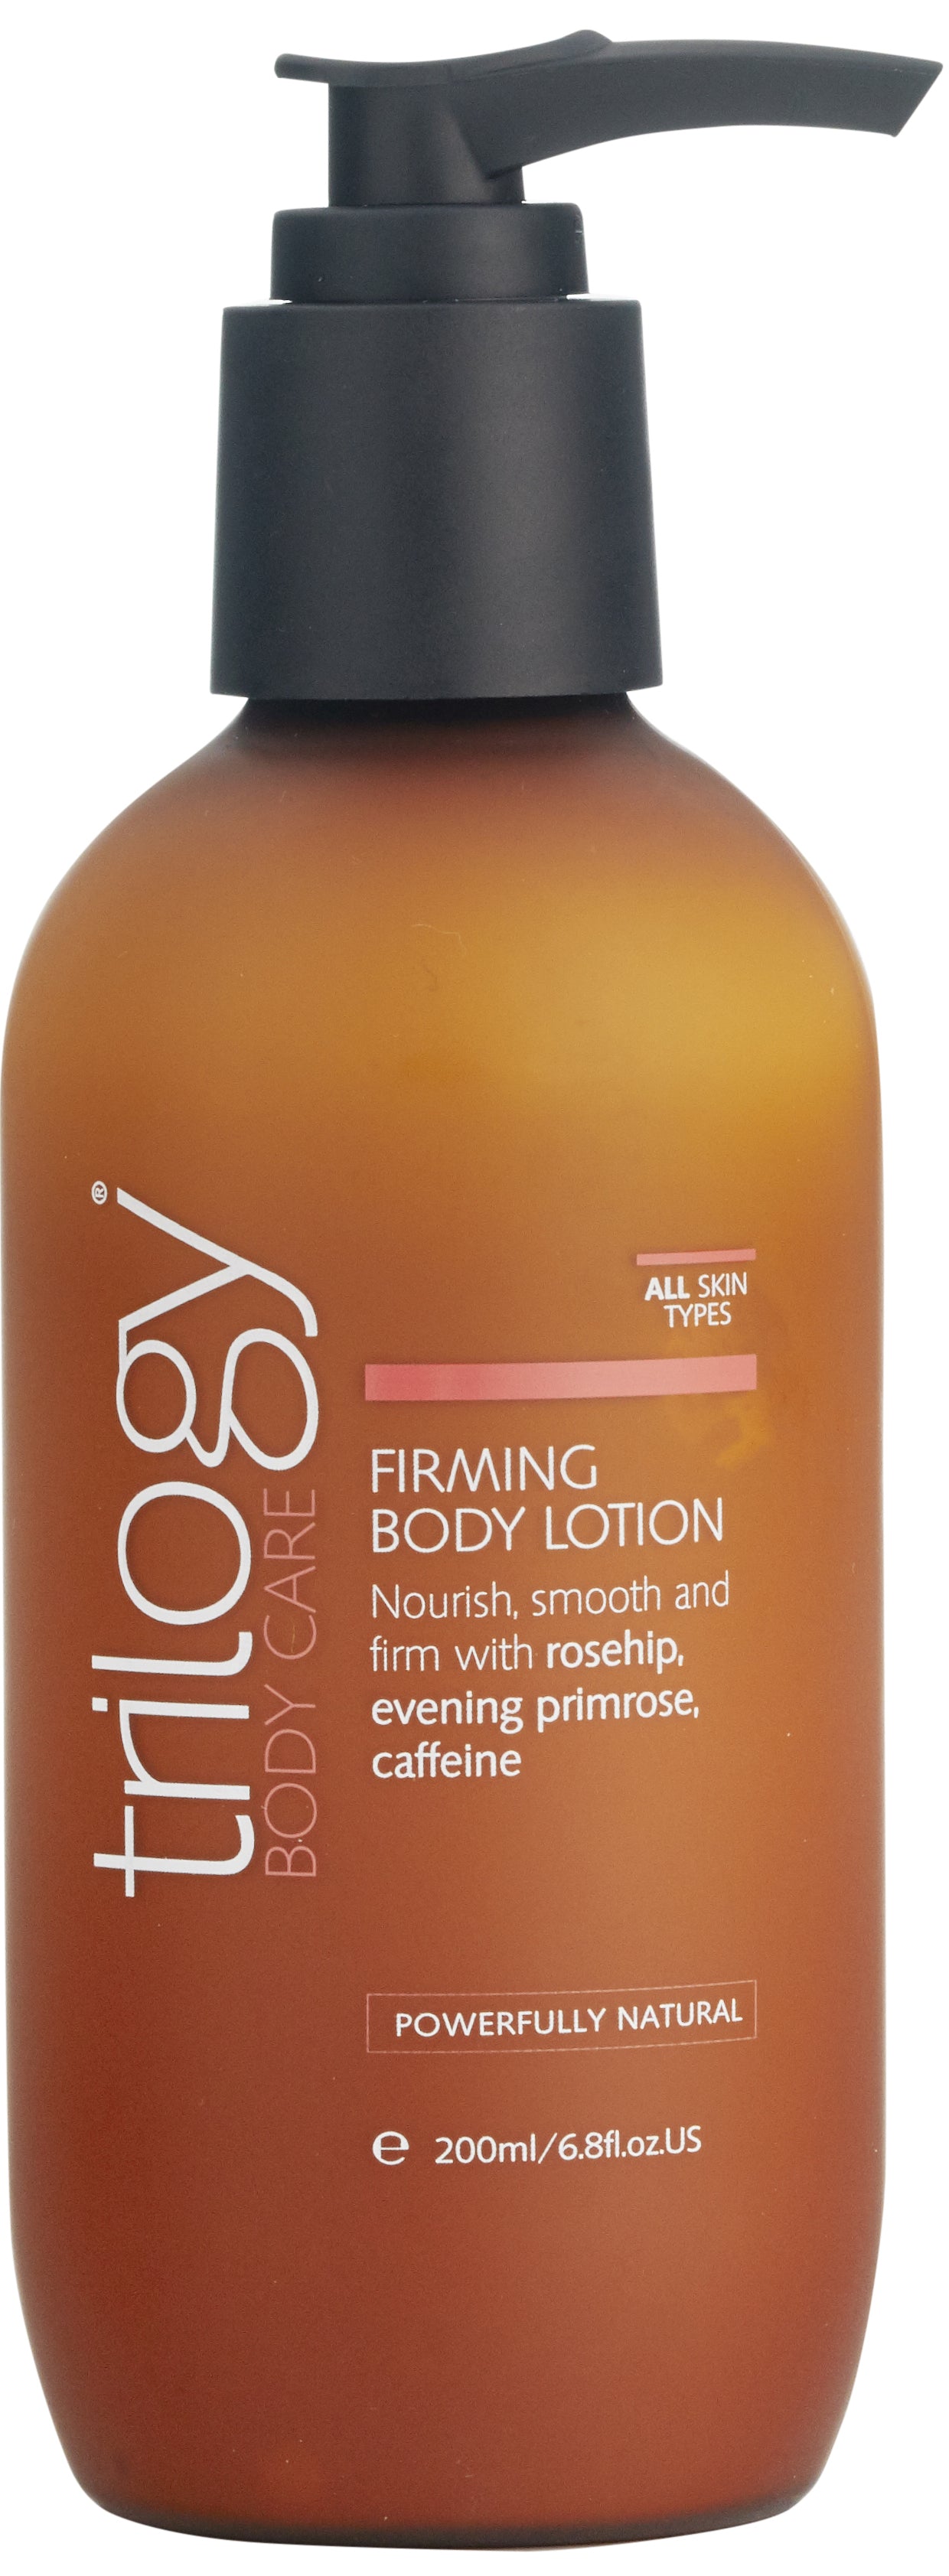 Trilogy firming body lotion, Leahys pharmacy 